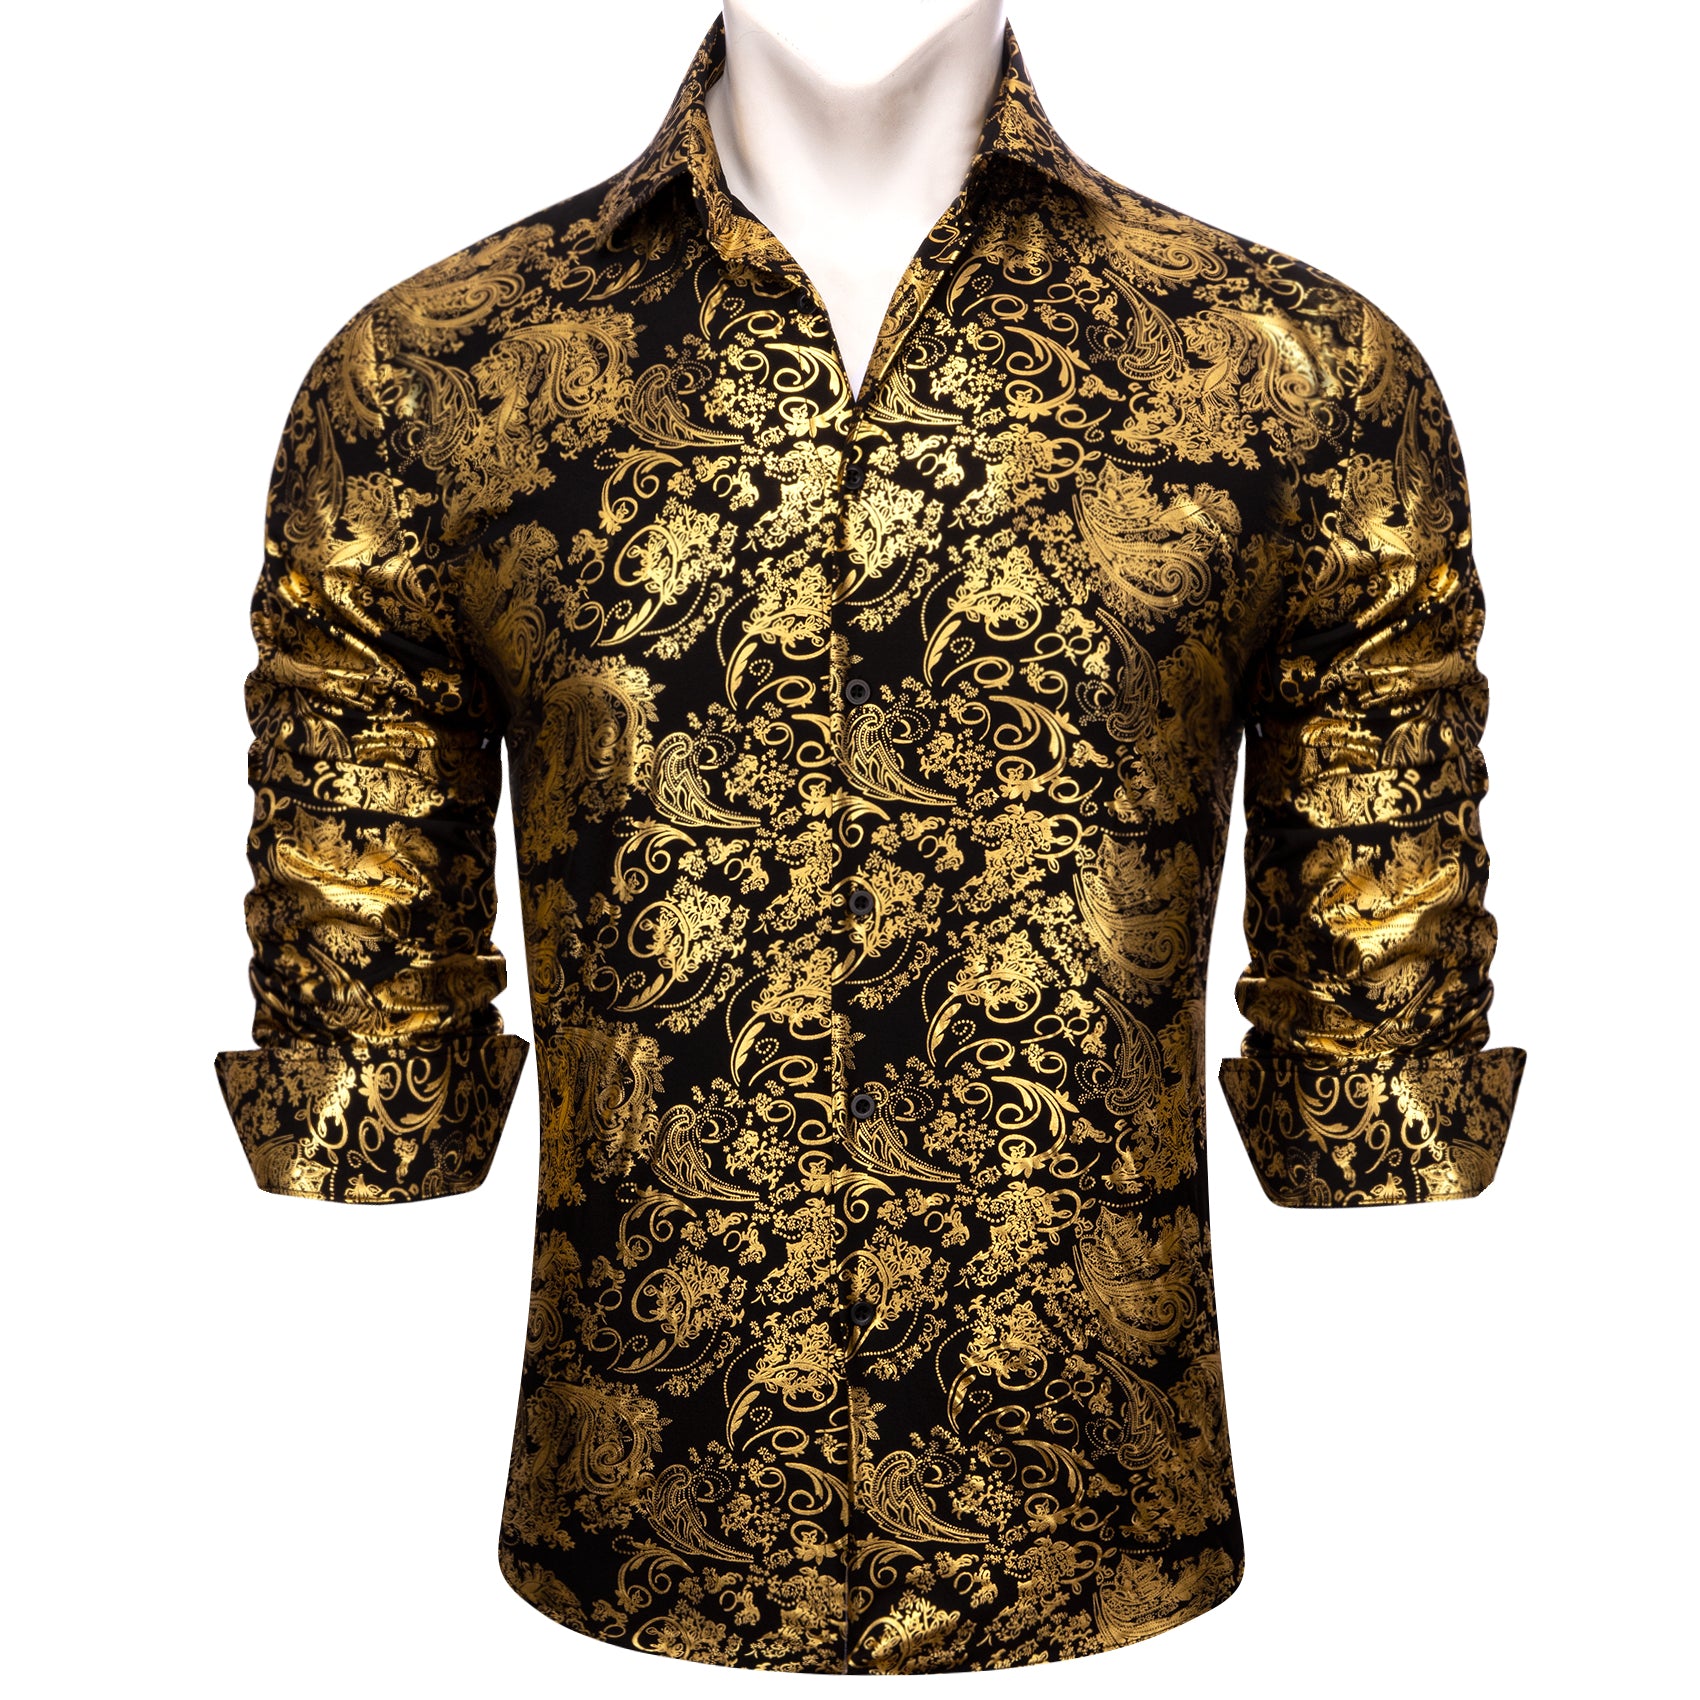 Barry.wang Button Down Shirt Classy Gold Black Paisley Silk Men's Shirt